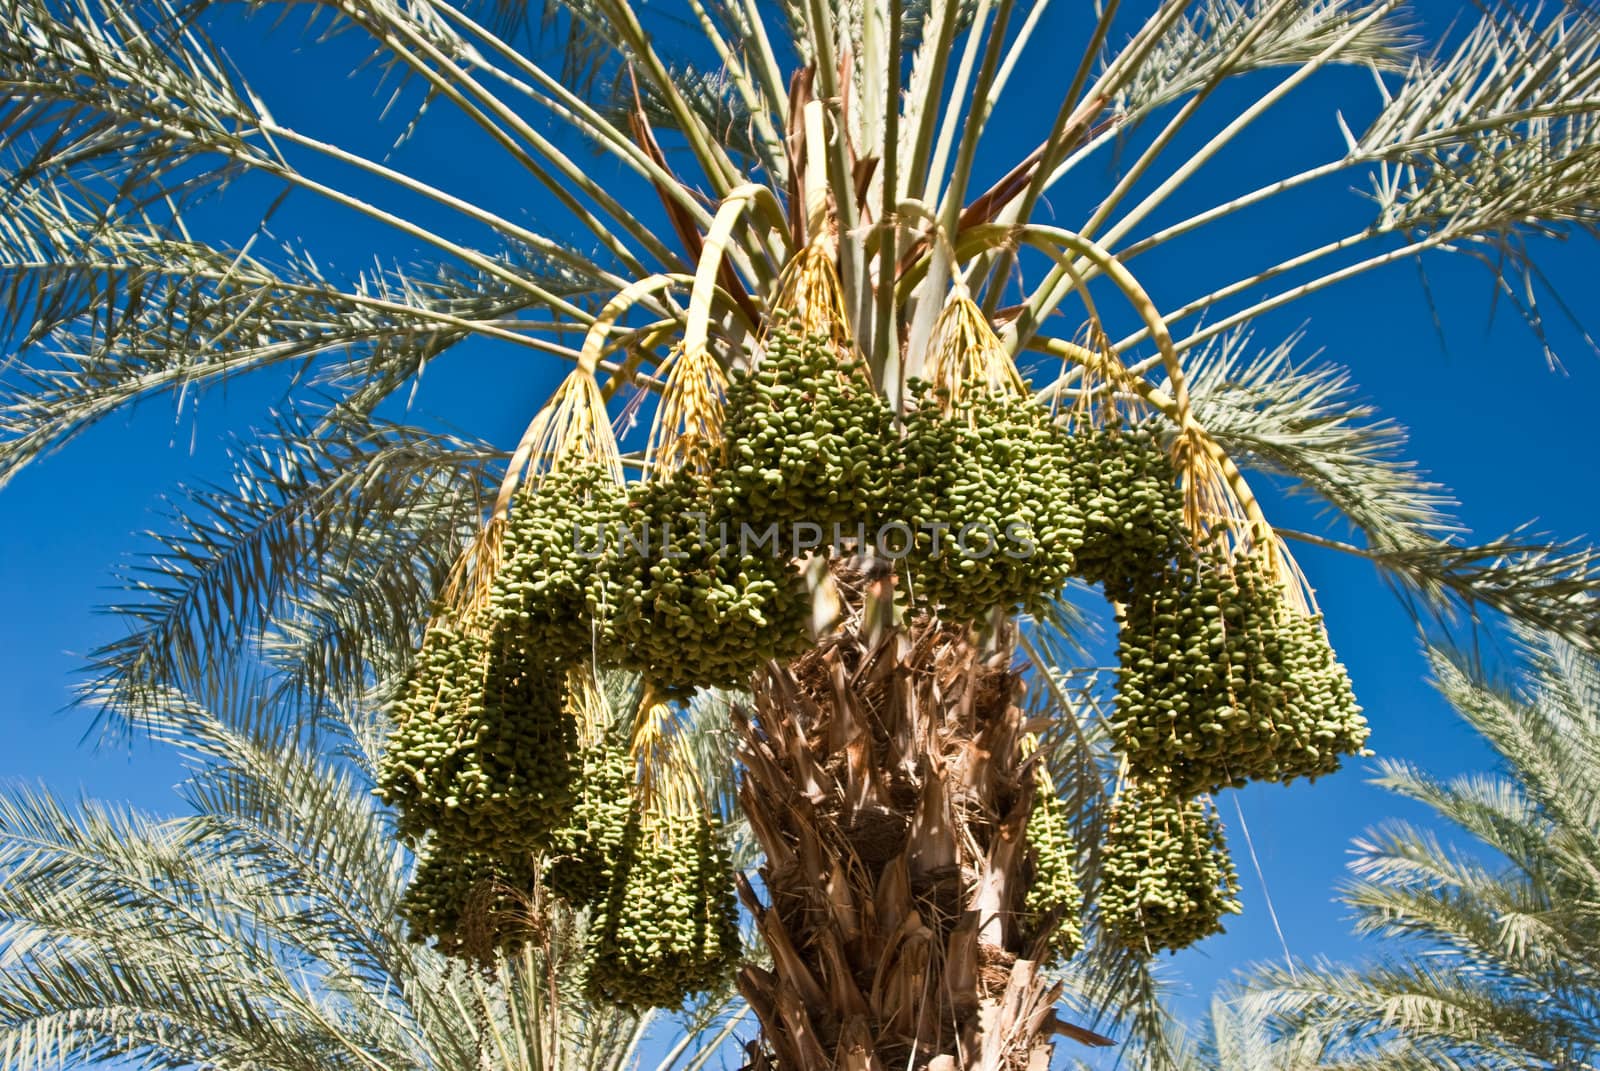 Ripe Dates on Palm Tree by emattil